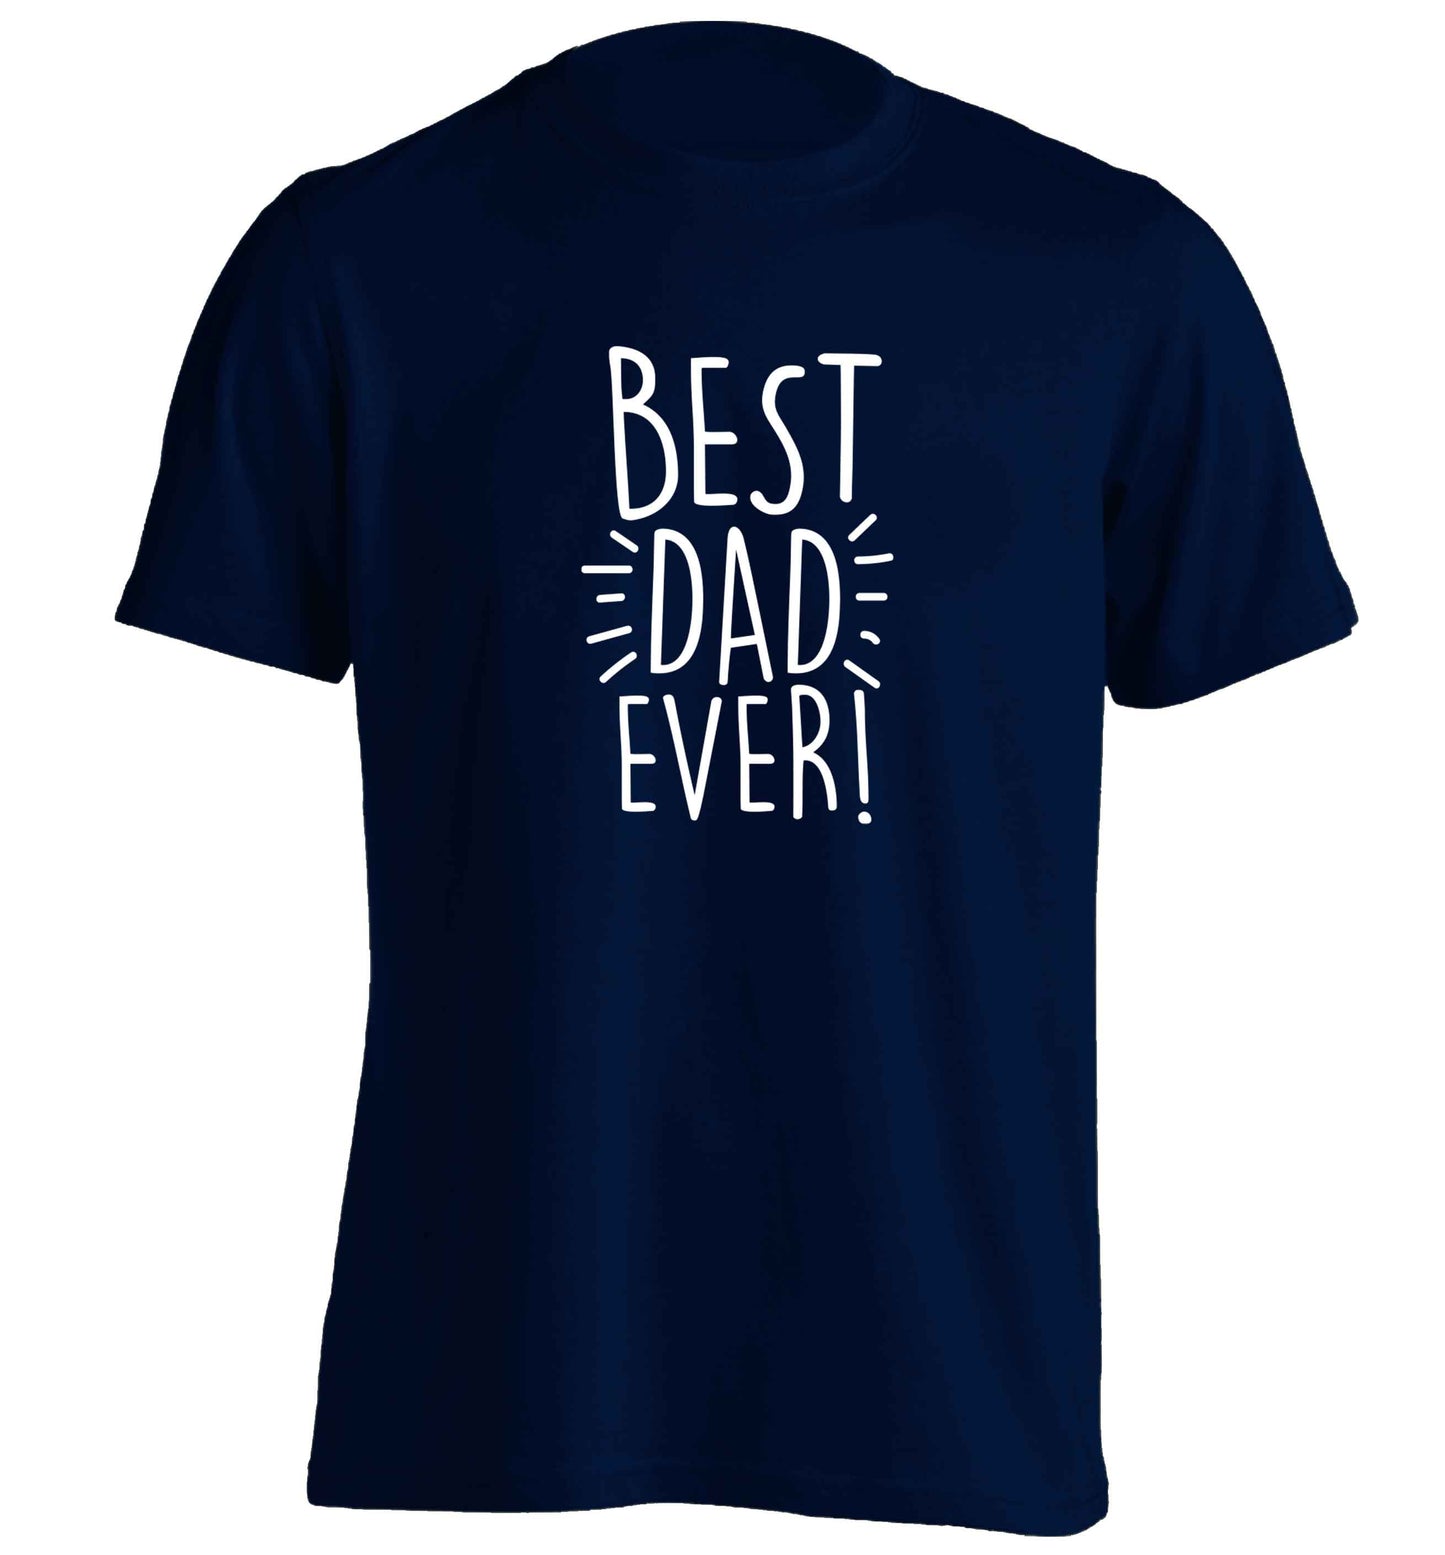 Best dad ever! adults unisex navy Tshirt 2XL